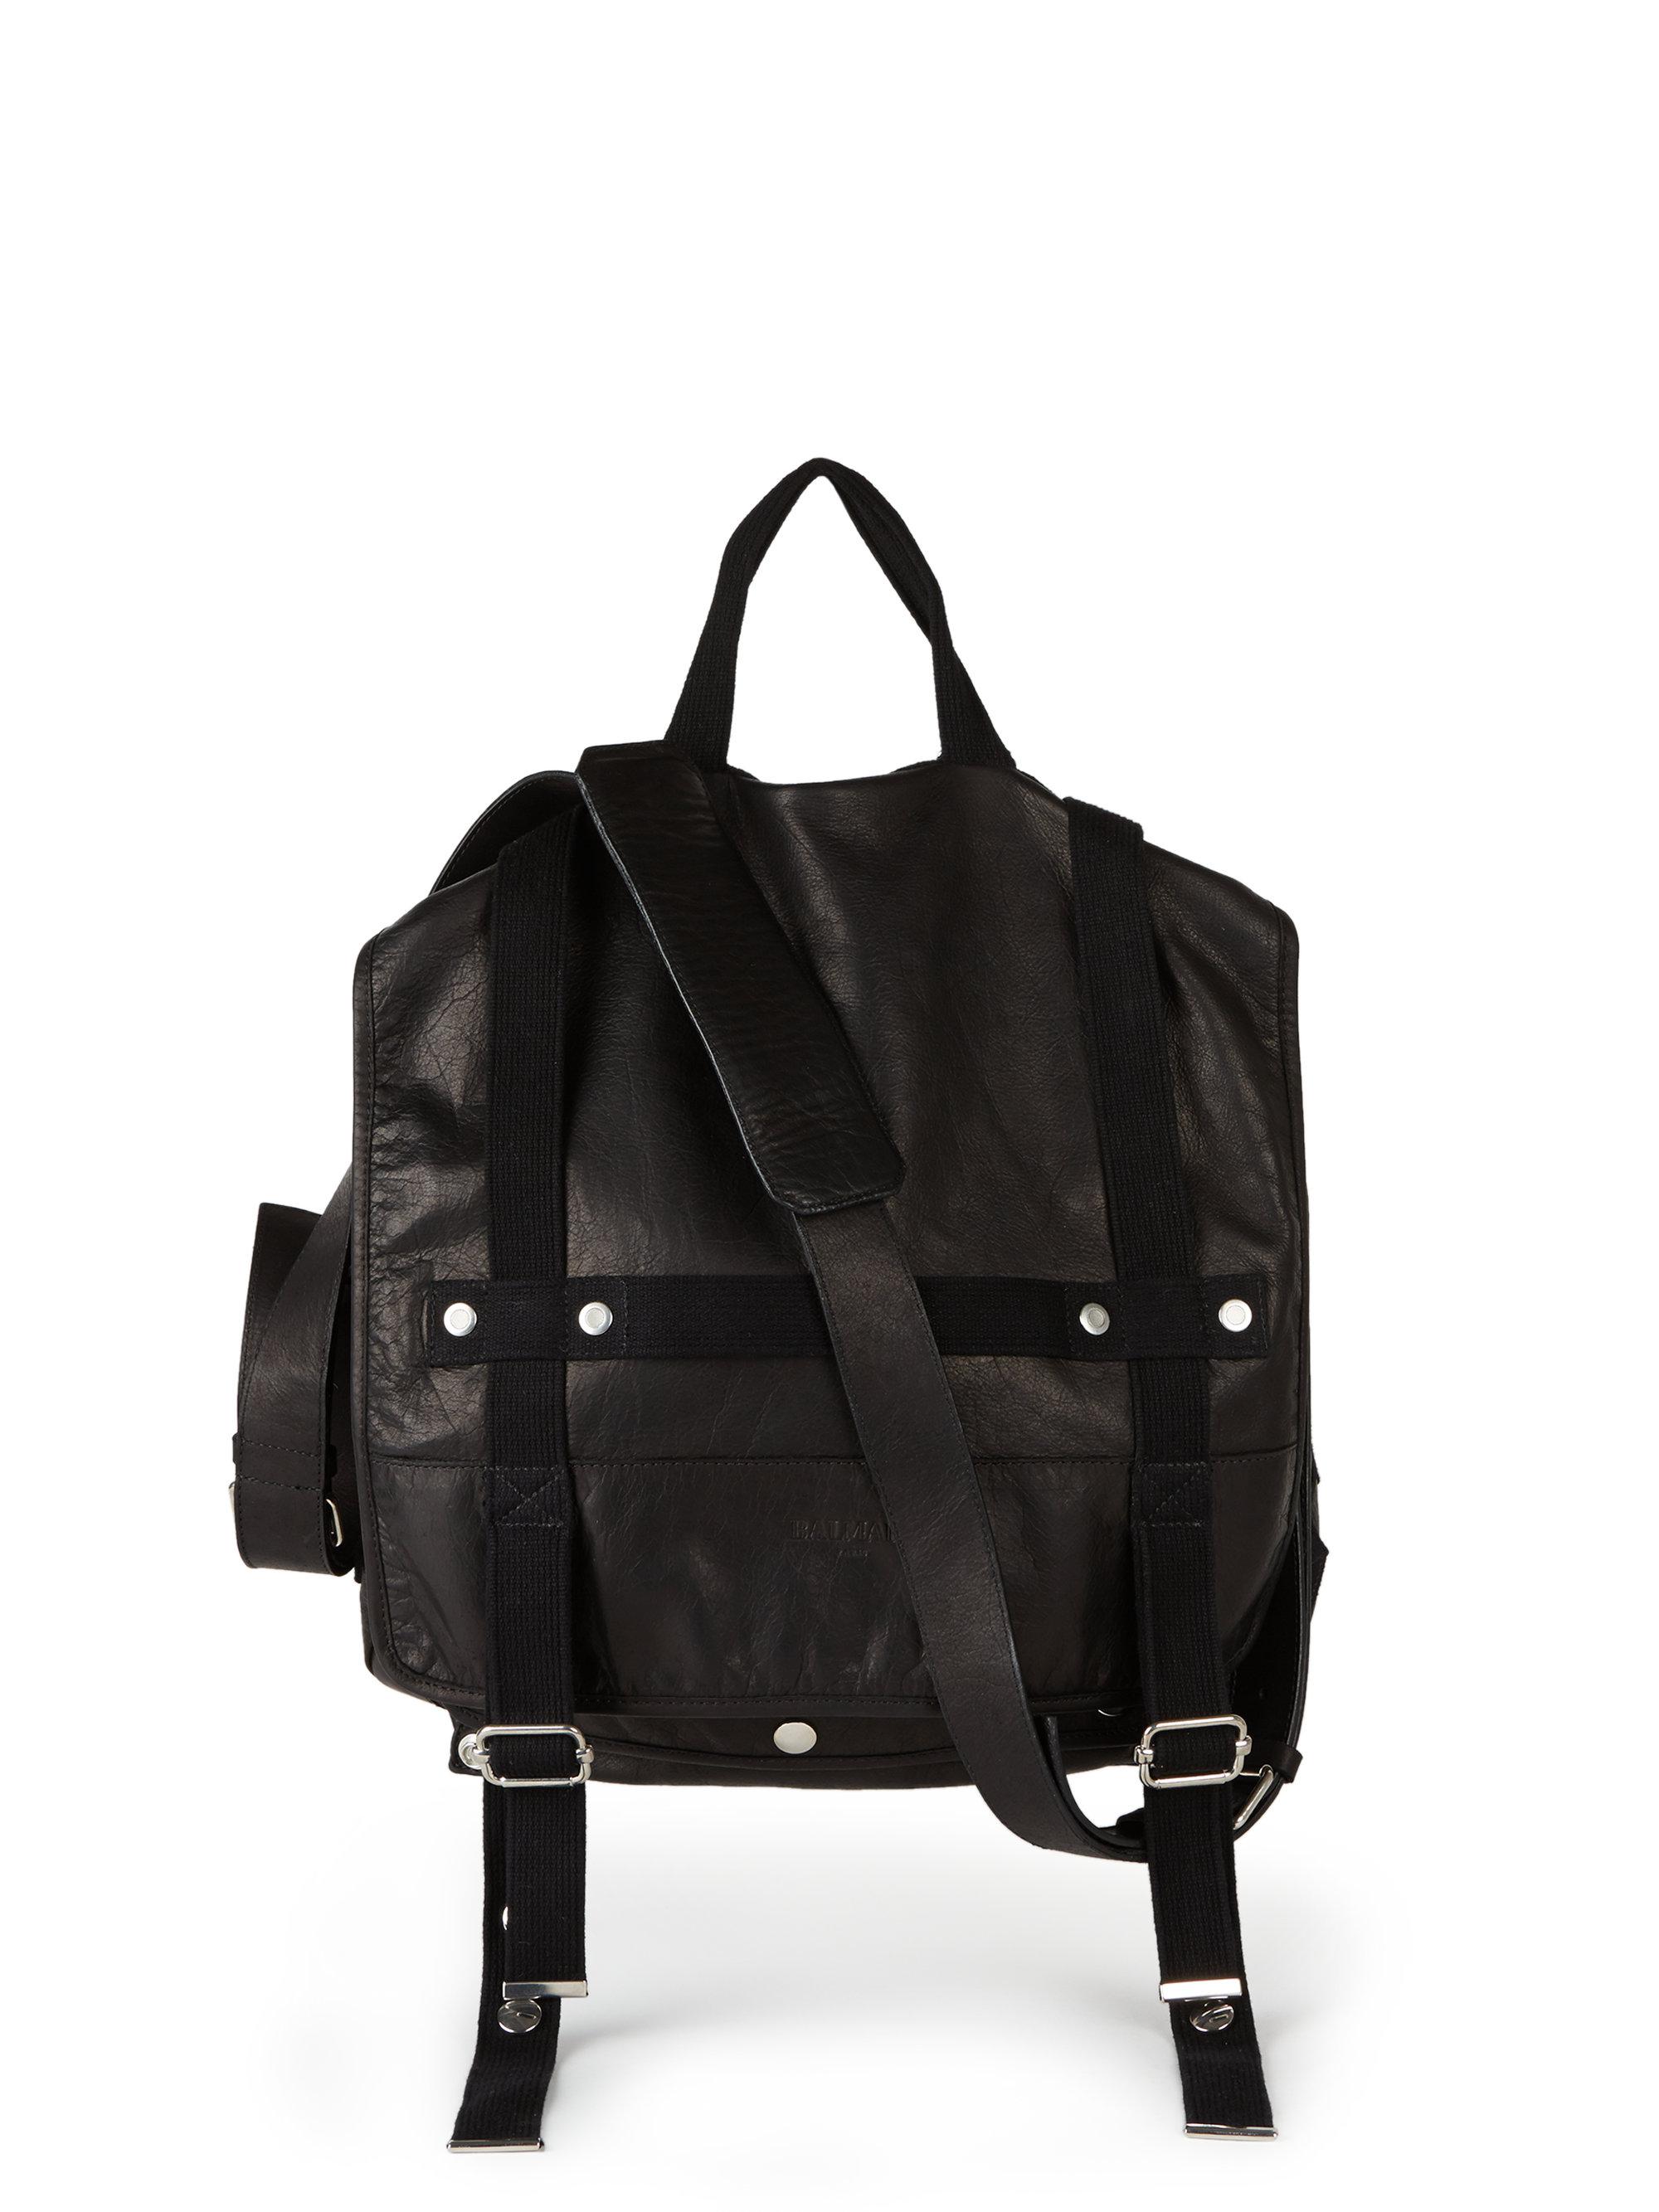 Balmain Leather Satchel Backpack in Black - Lyst